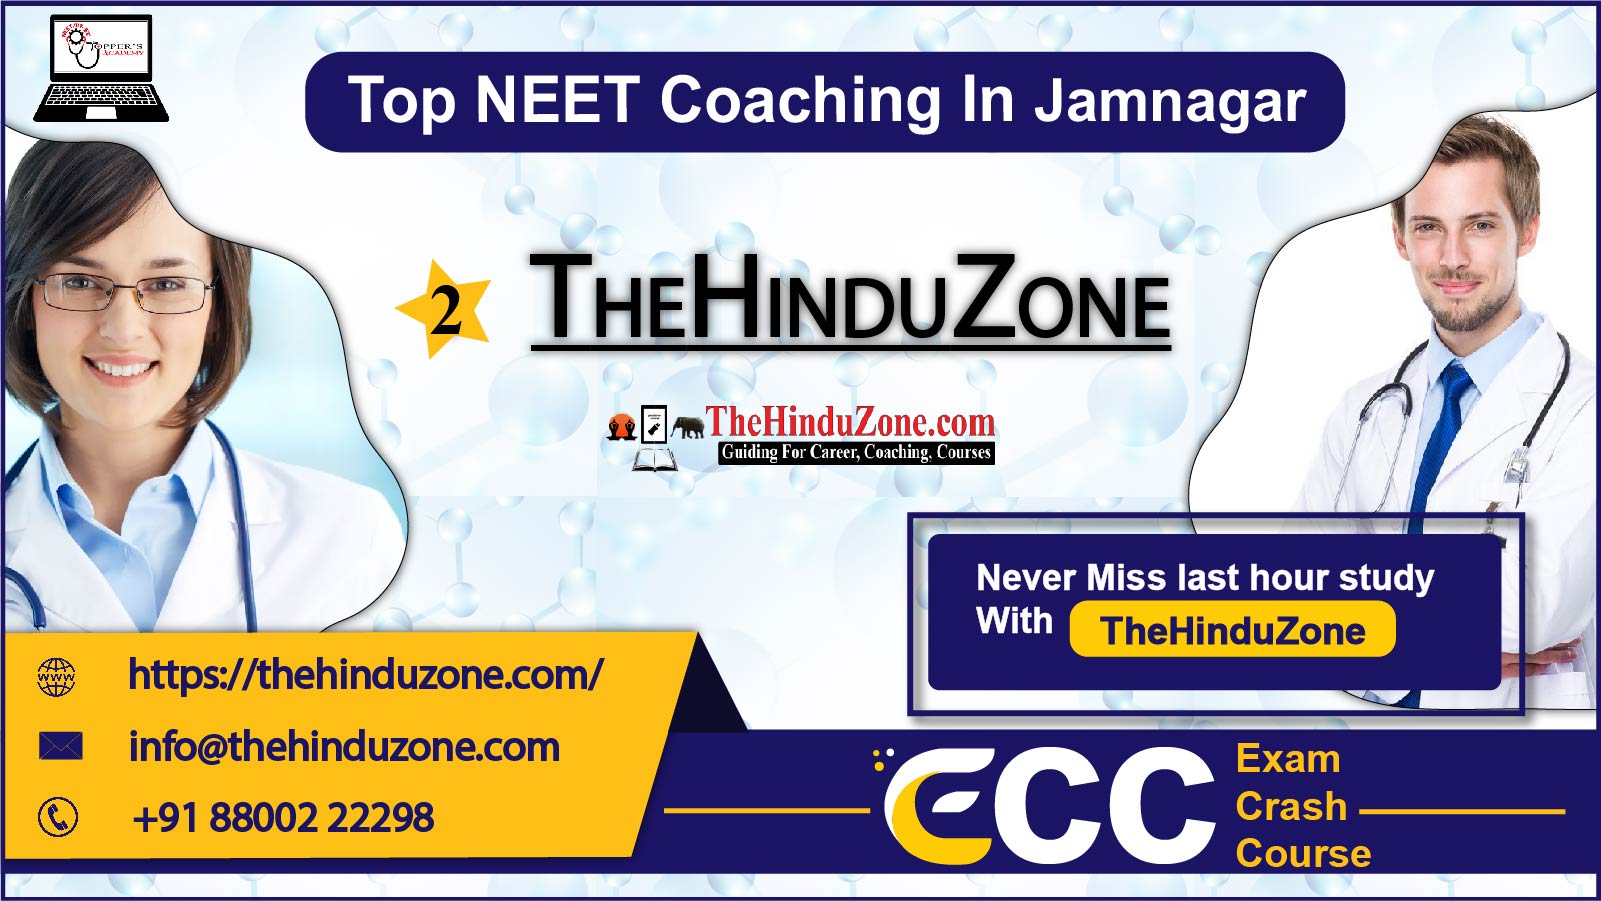 The Hinduzone NEET Coaching in Jamnagar